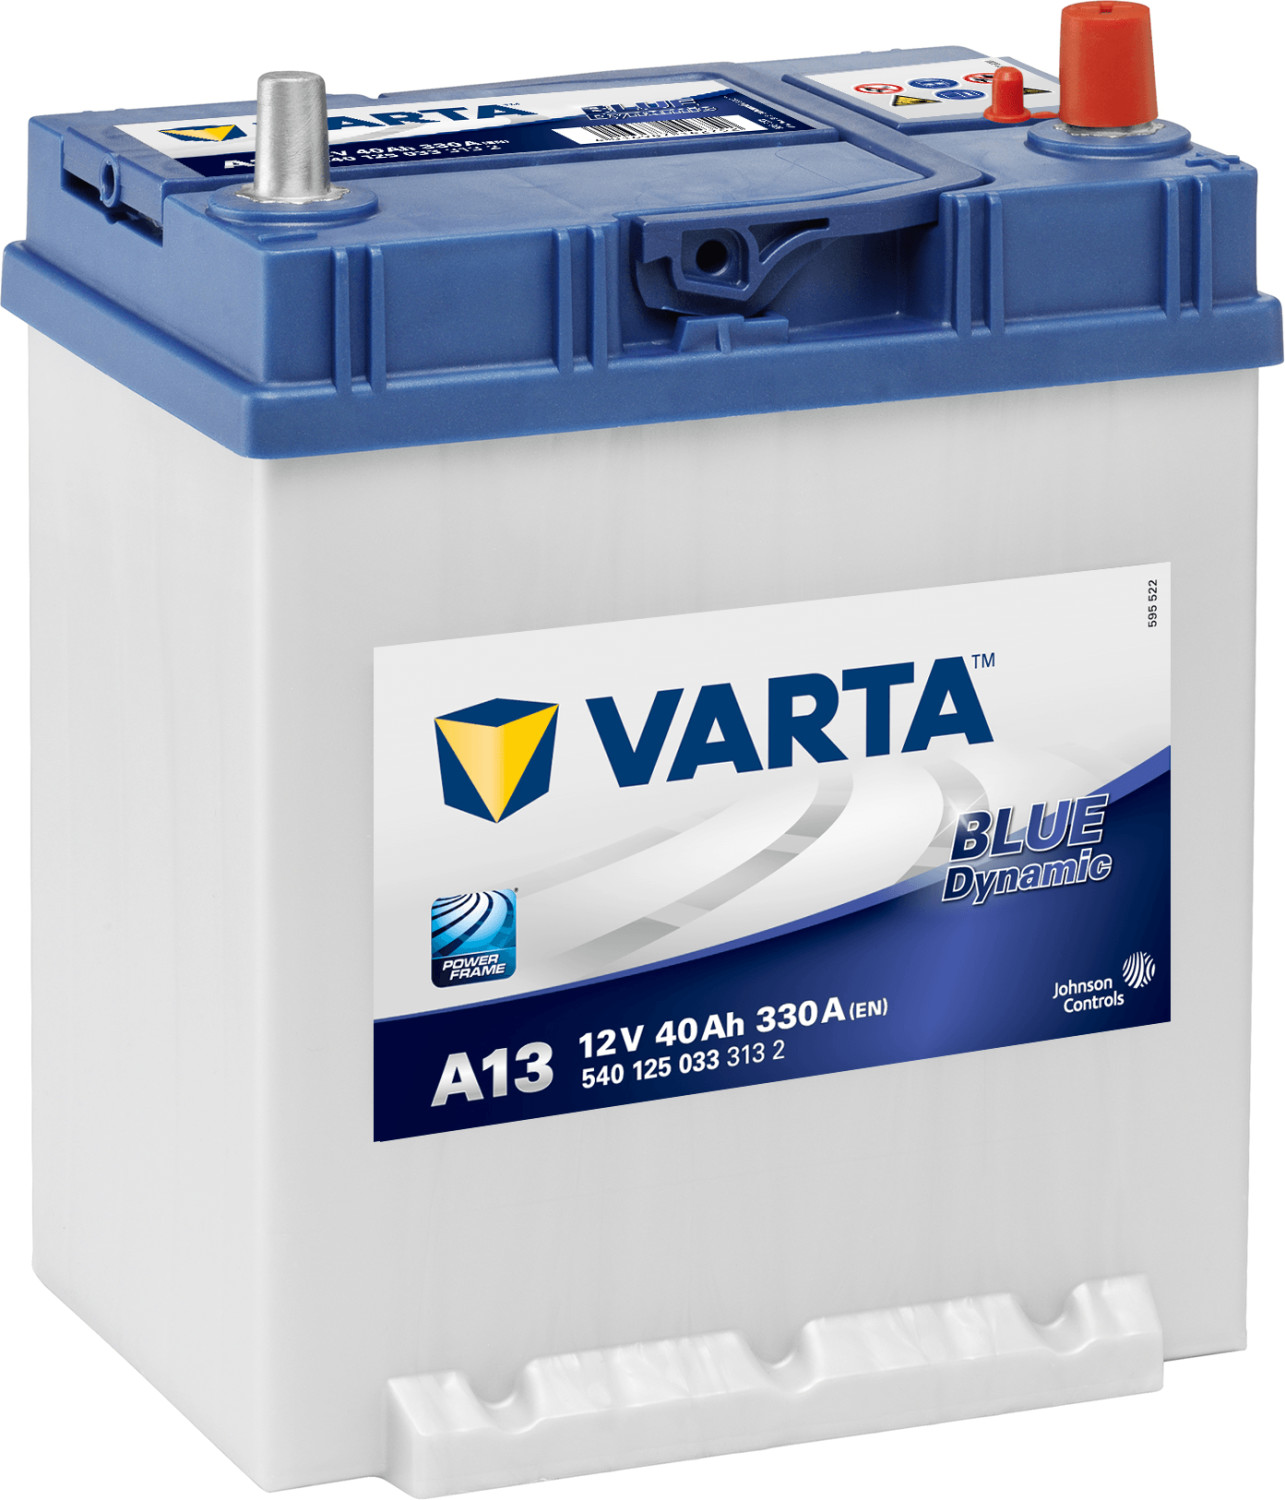 VARTA Blue Dynamic 12V 60Ah D24 au meilleur prix